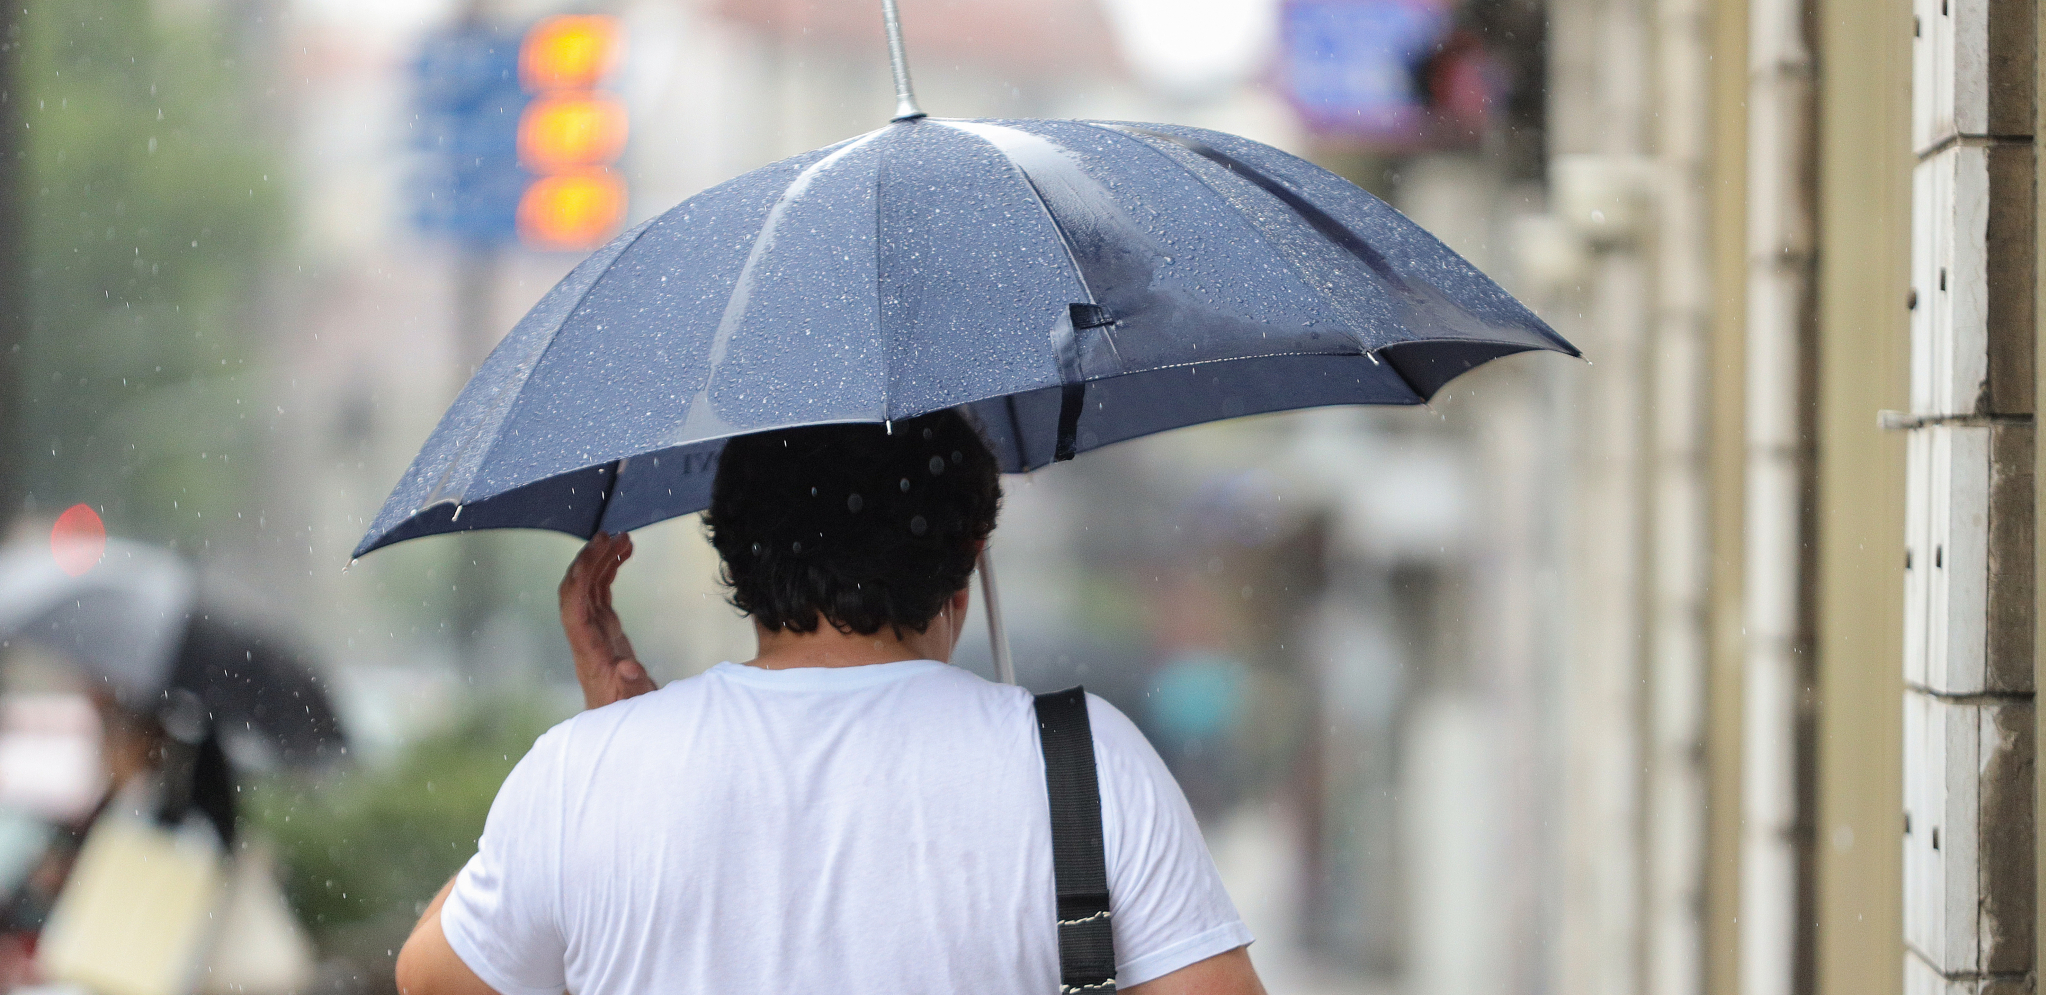 PRED NAMA JE DAN PRIJATNE TEMPERATURE: Ponesite kišobran sa sobom, moguća je iznenadna oluja